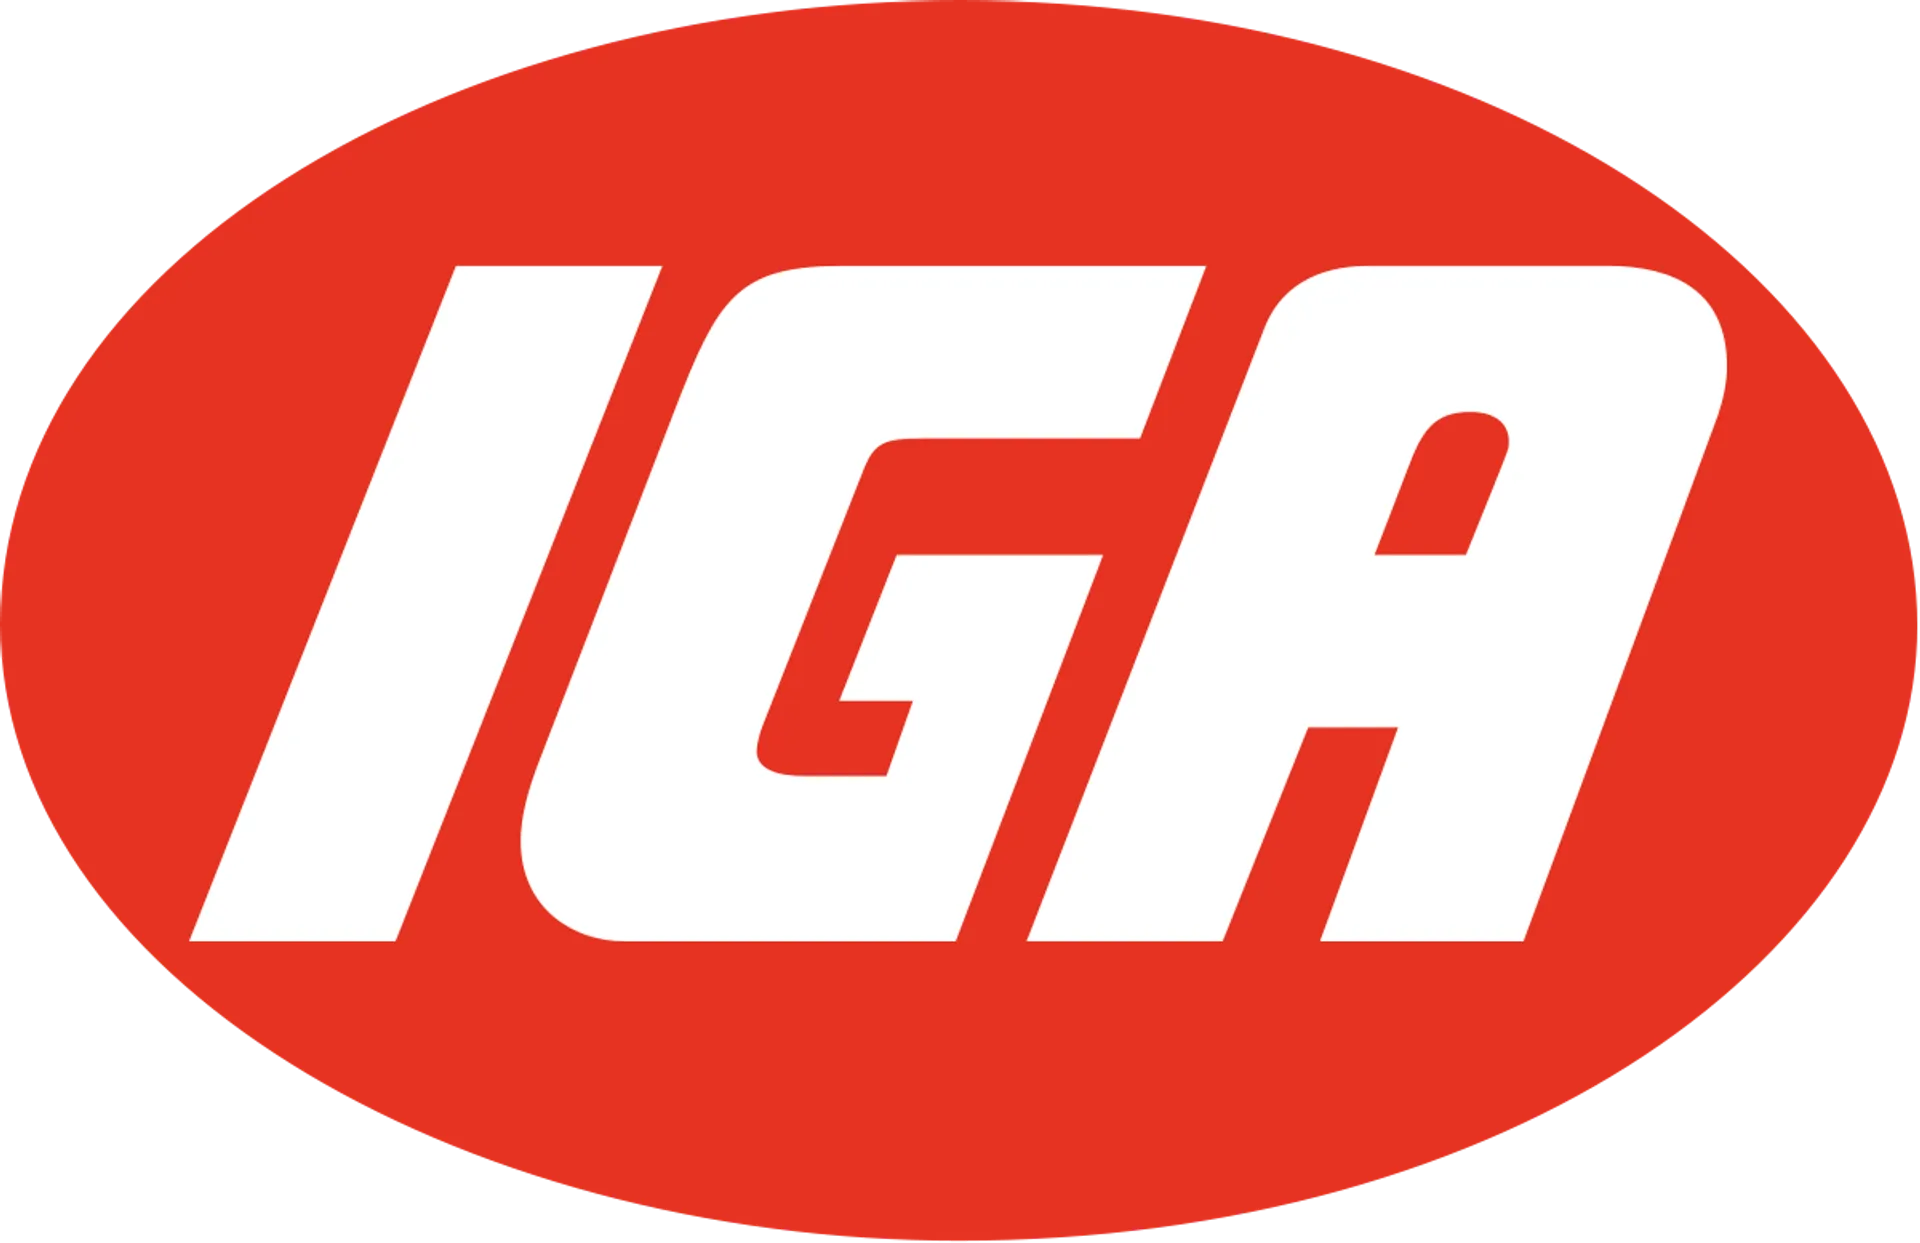 ROWE’S IGA SUPERMARKETS logo